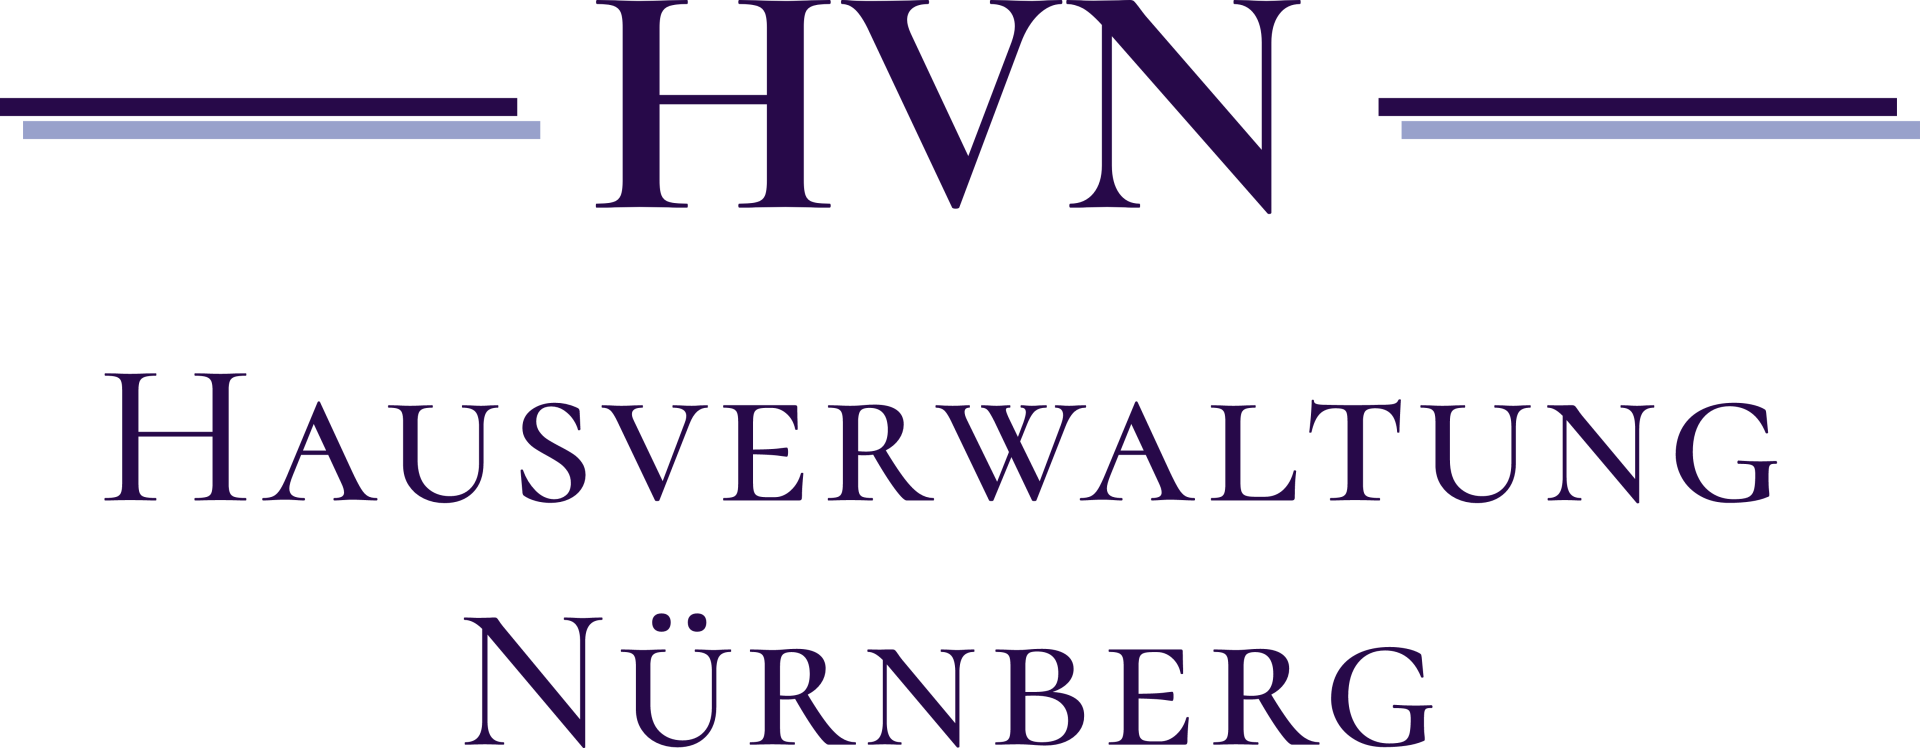 HVN - Hausverwaltung Nürnberg